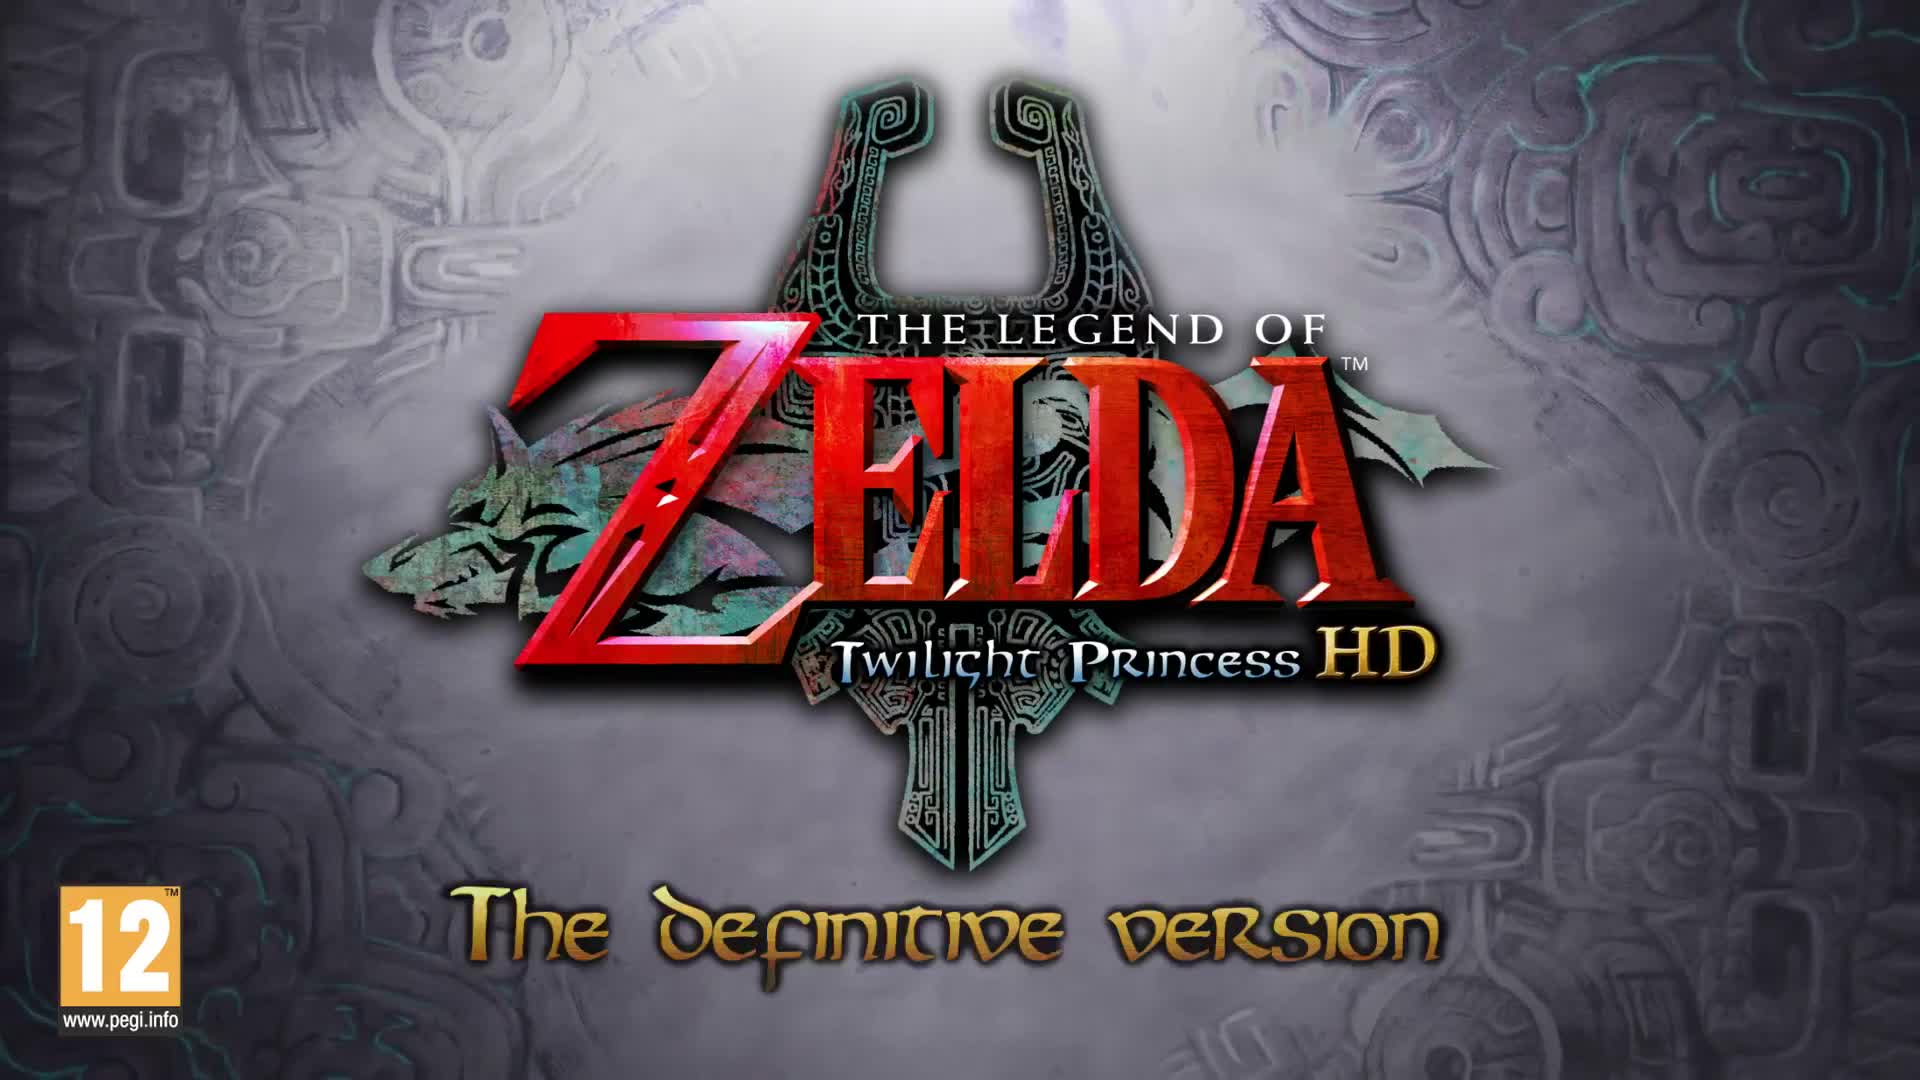 The Legend of Zelda: Twilight Princess HD - Game Features Trailer